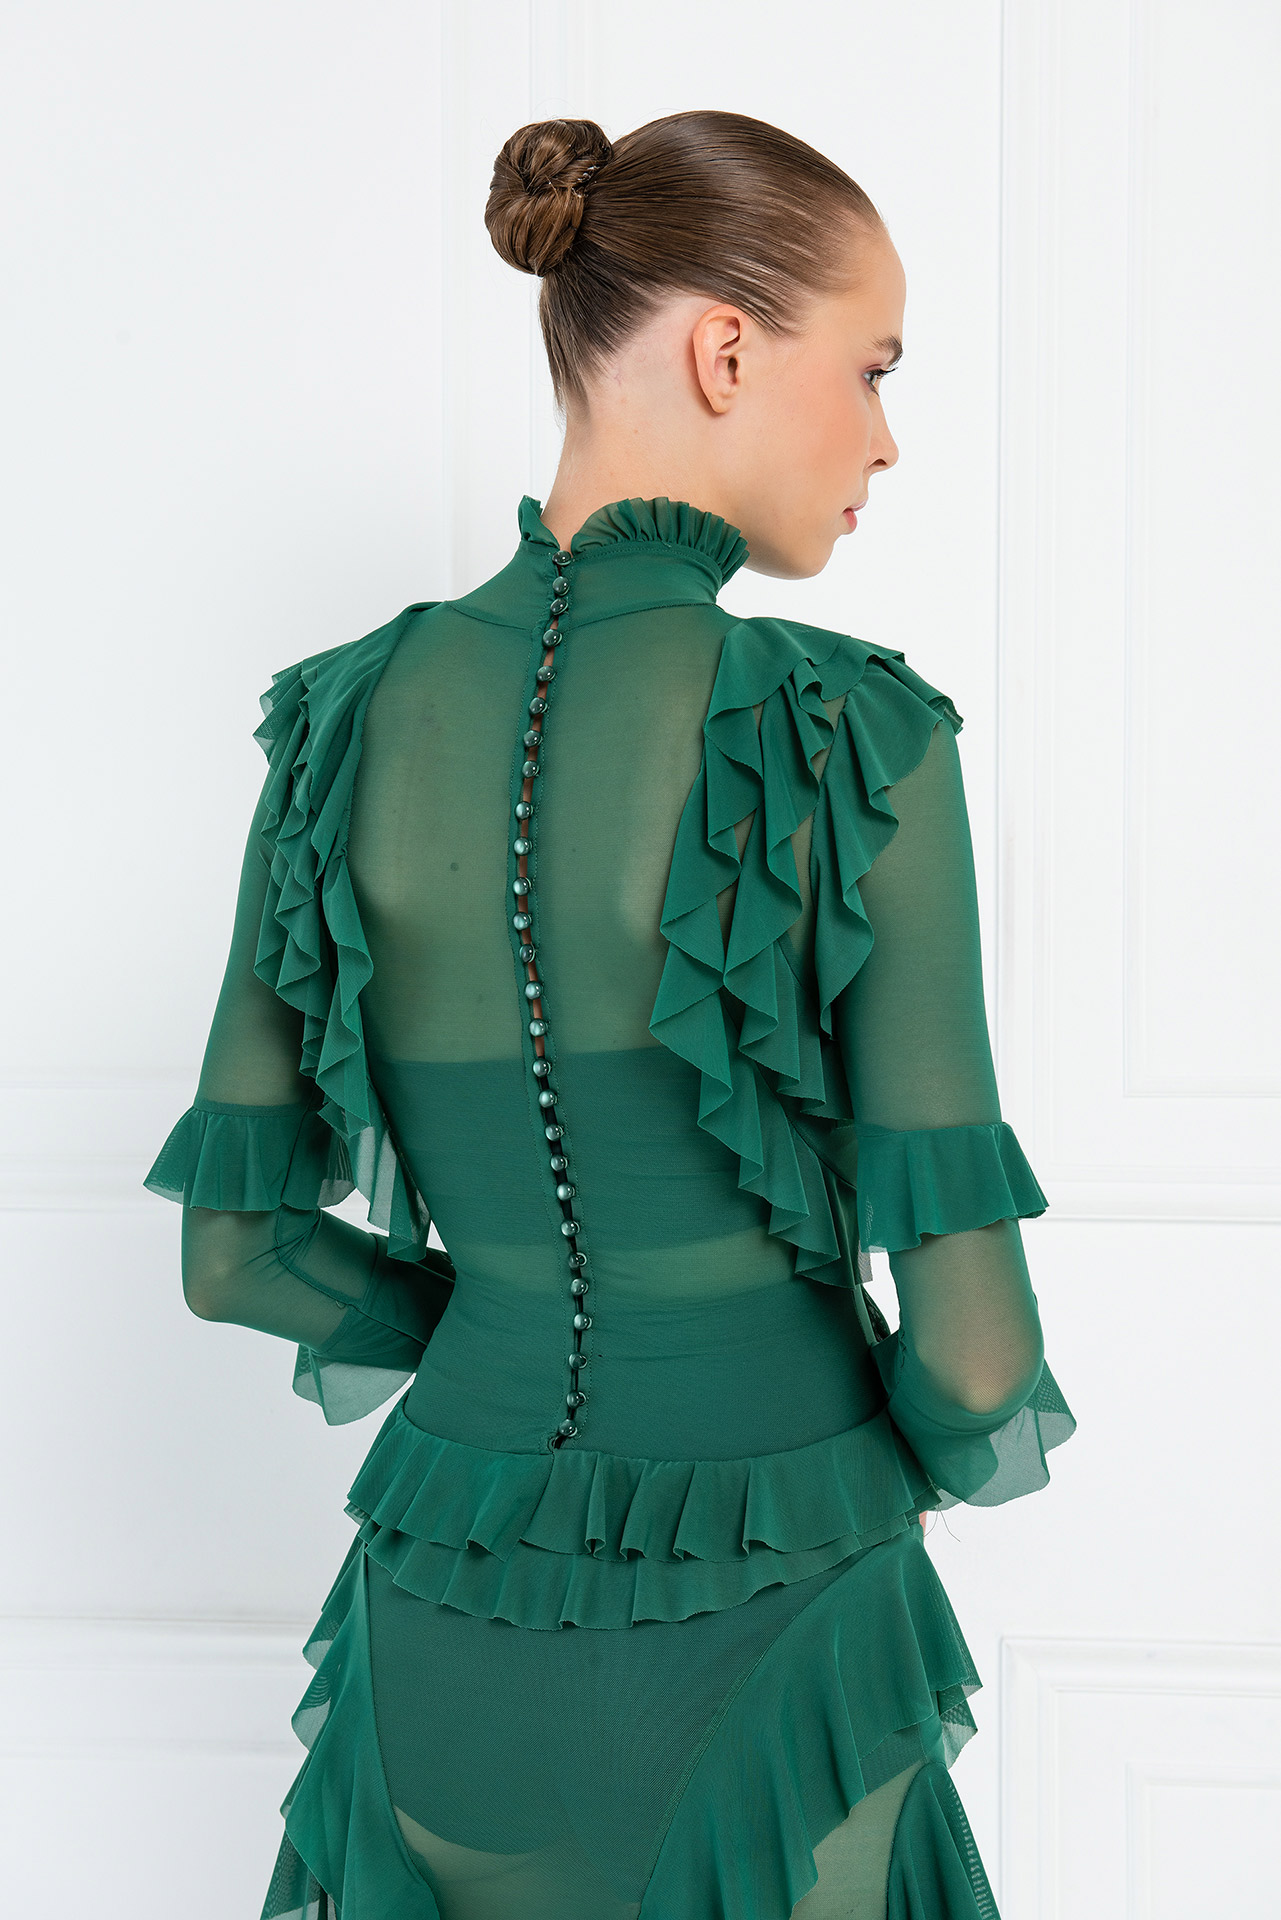 Wholesale Sheer Ruffled Maxi Dress in Dark Green